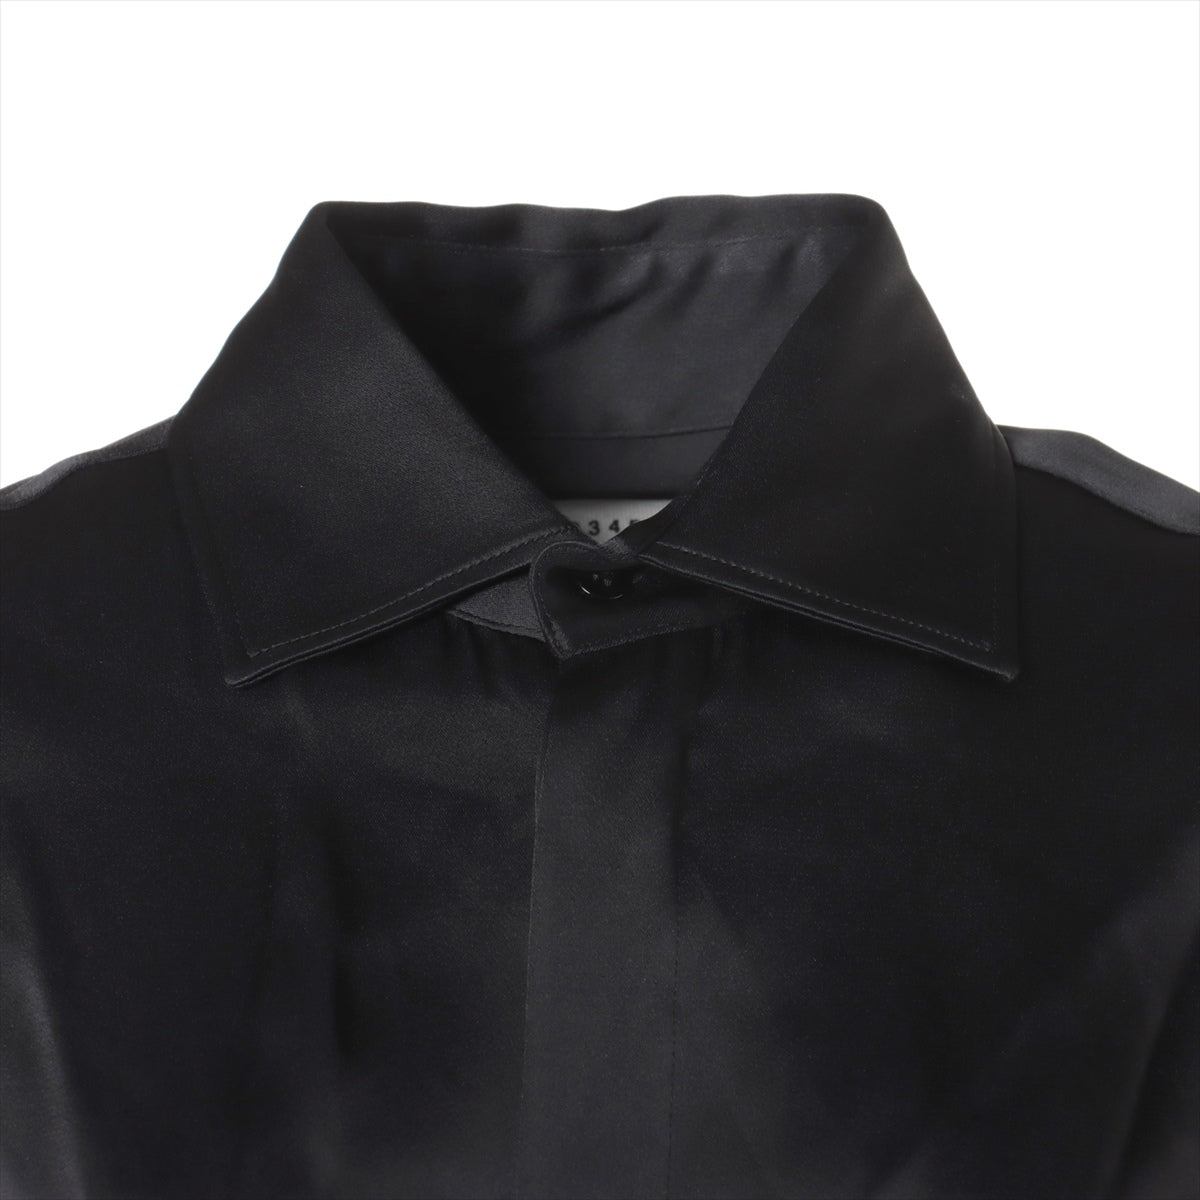 Maison Margiela 20AW Cotton×acetate Dress 36 Ladies' Black x Gray  S51CU0201 ①